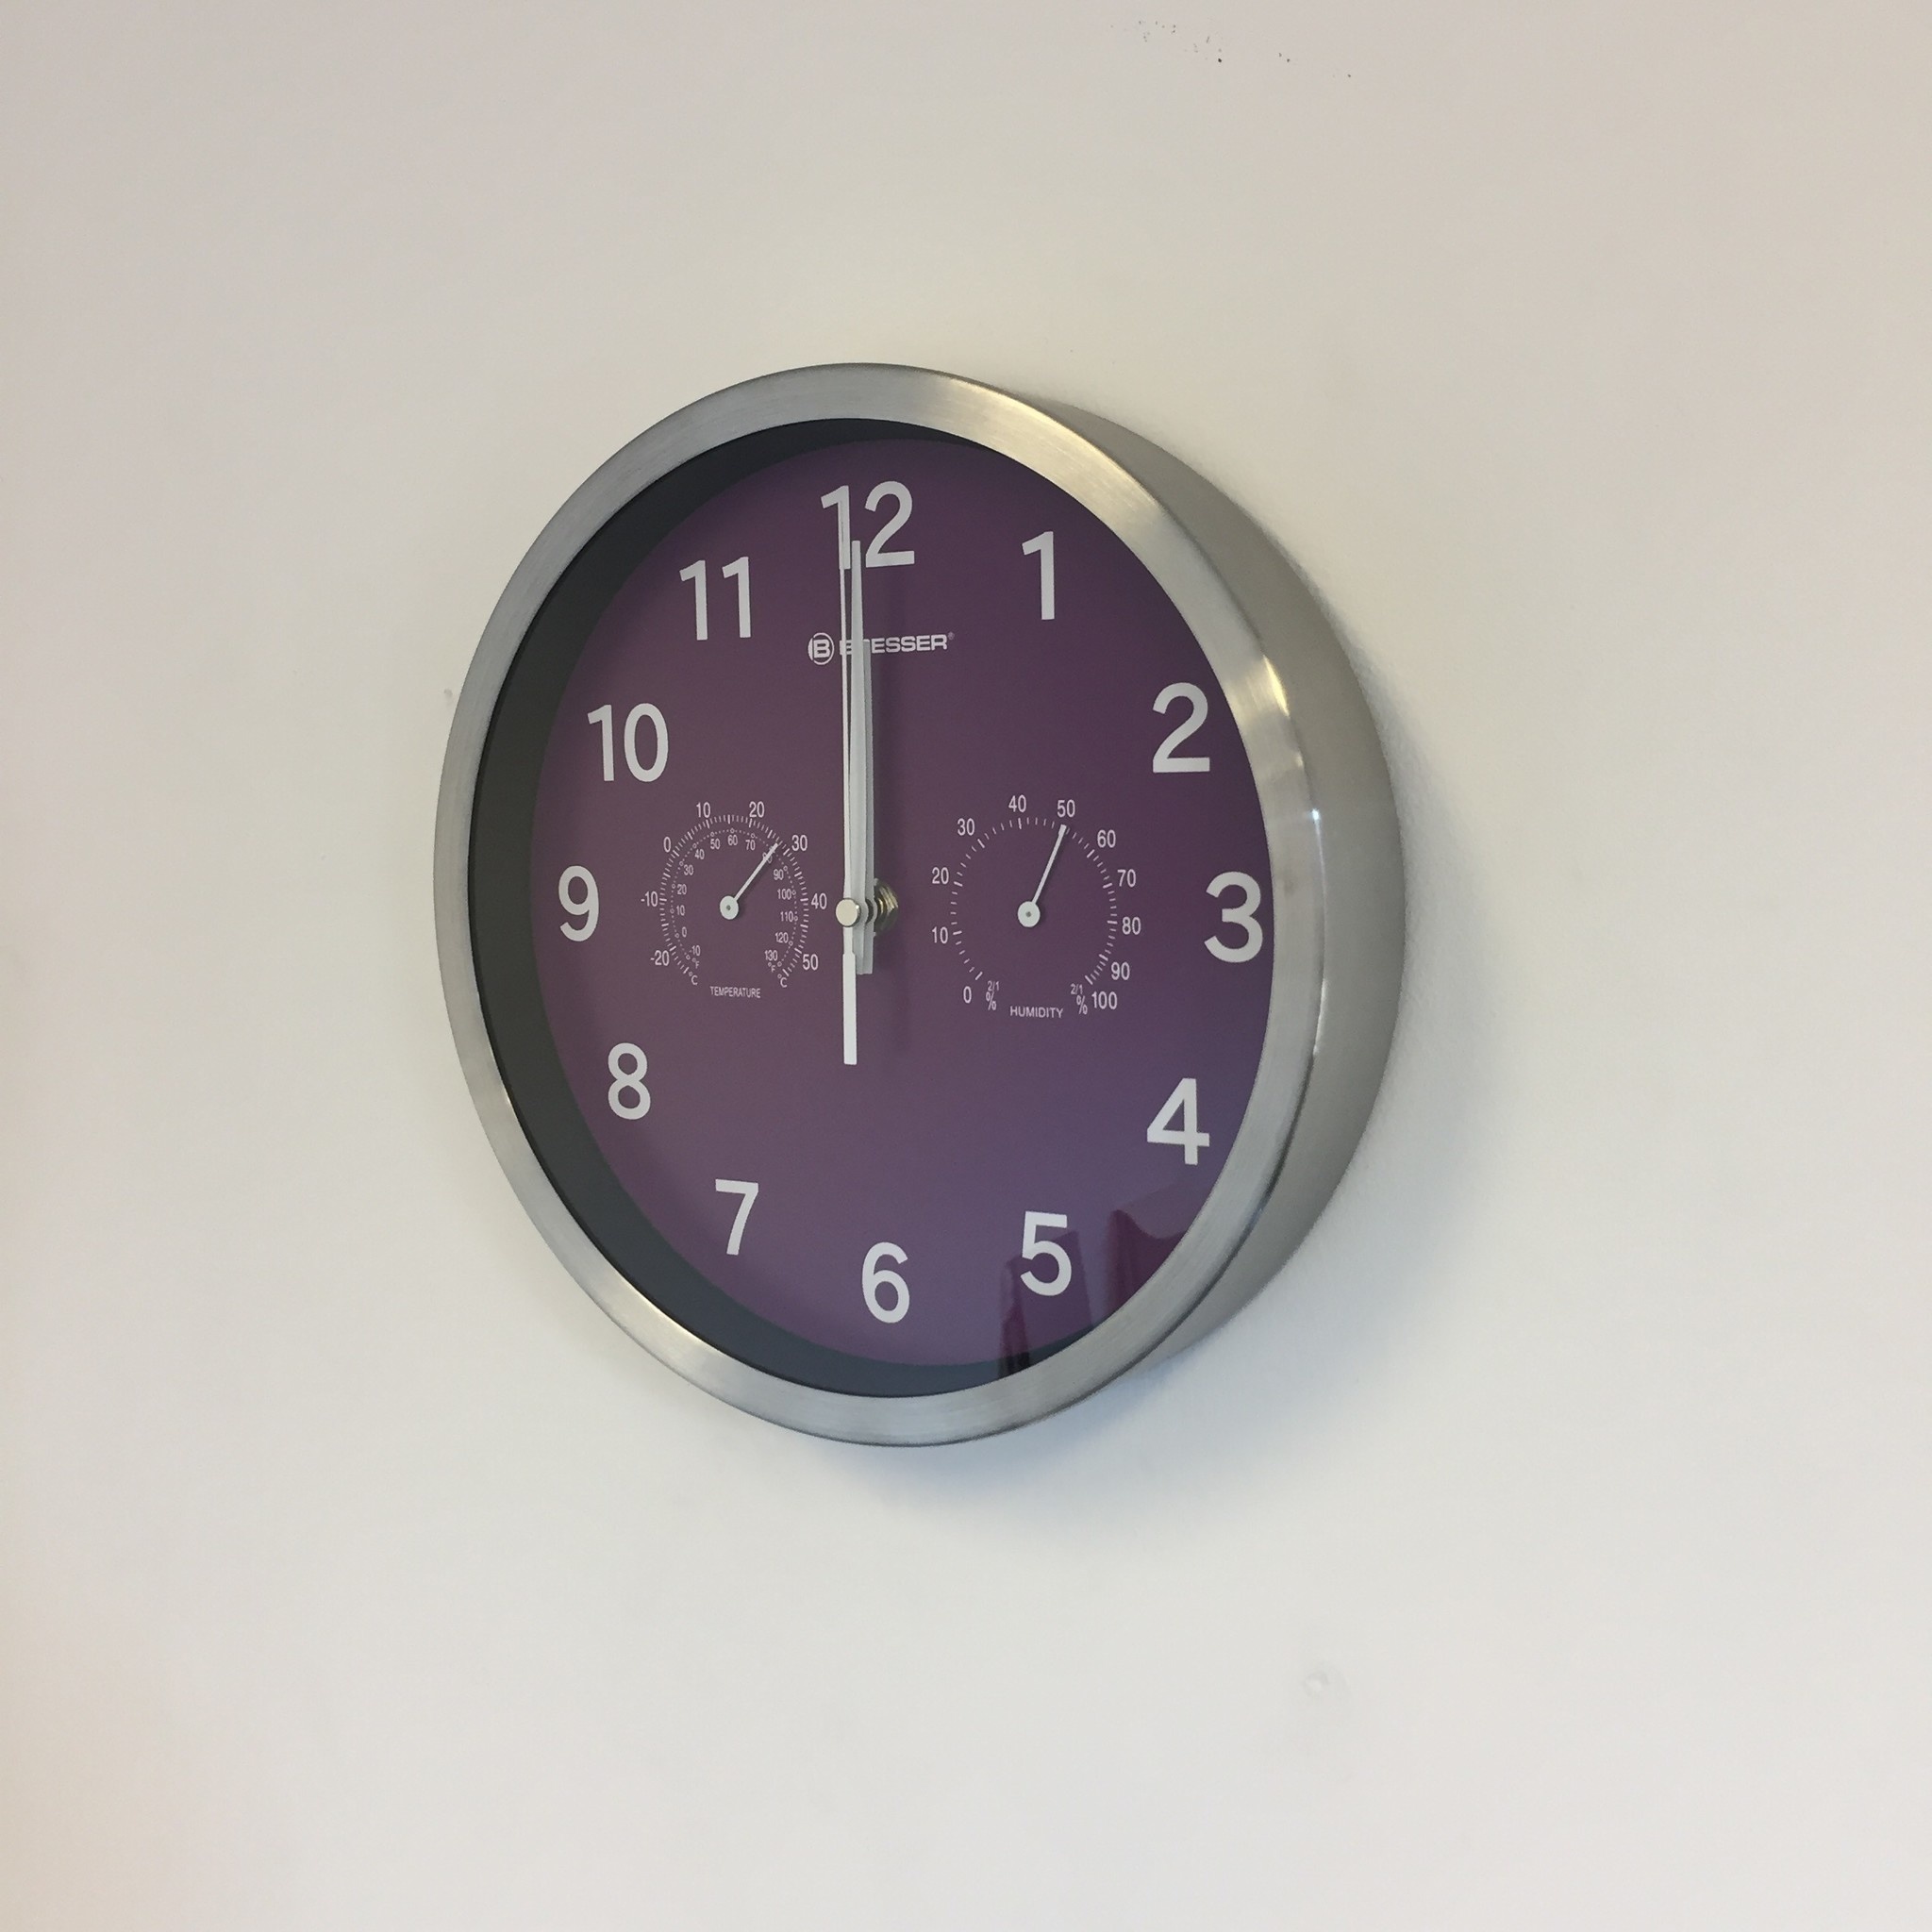 NiceTime Design - Wall clock Temperature and Hygro Meter Modern Design Purple